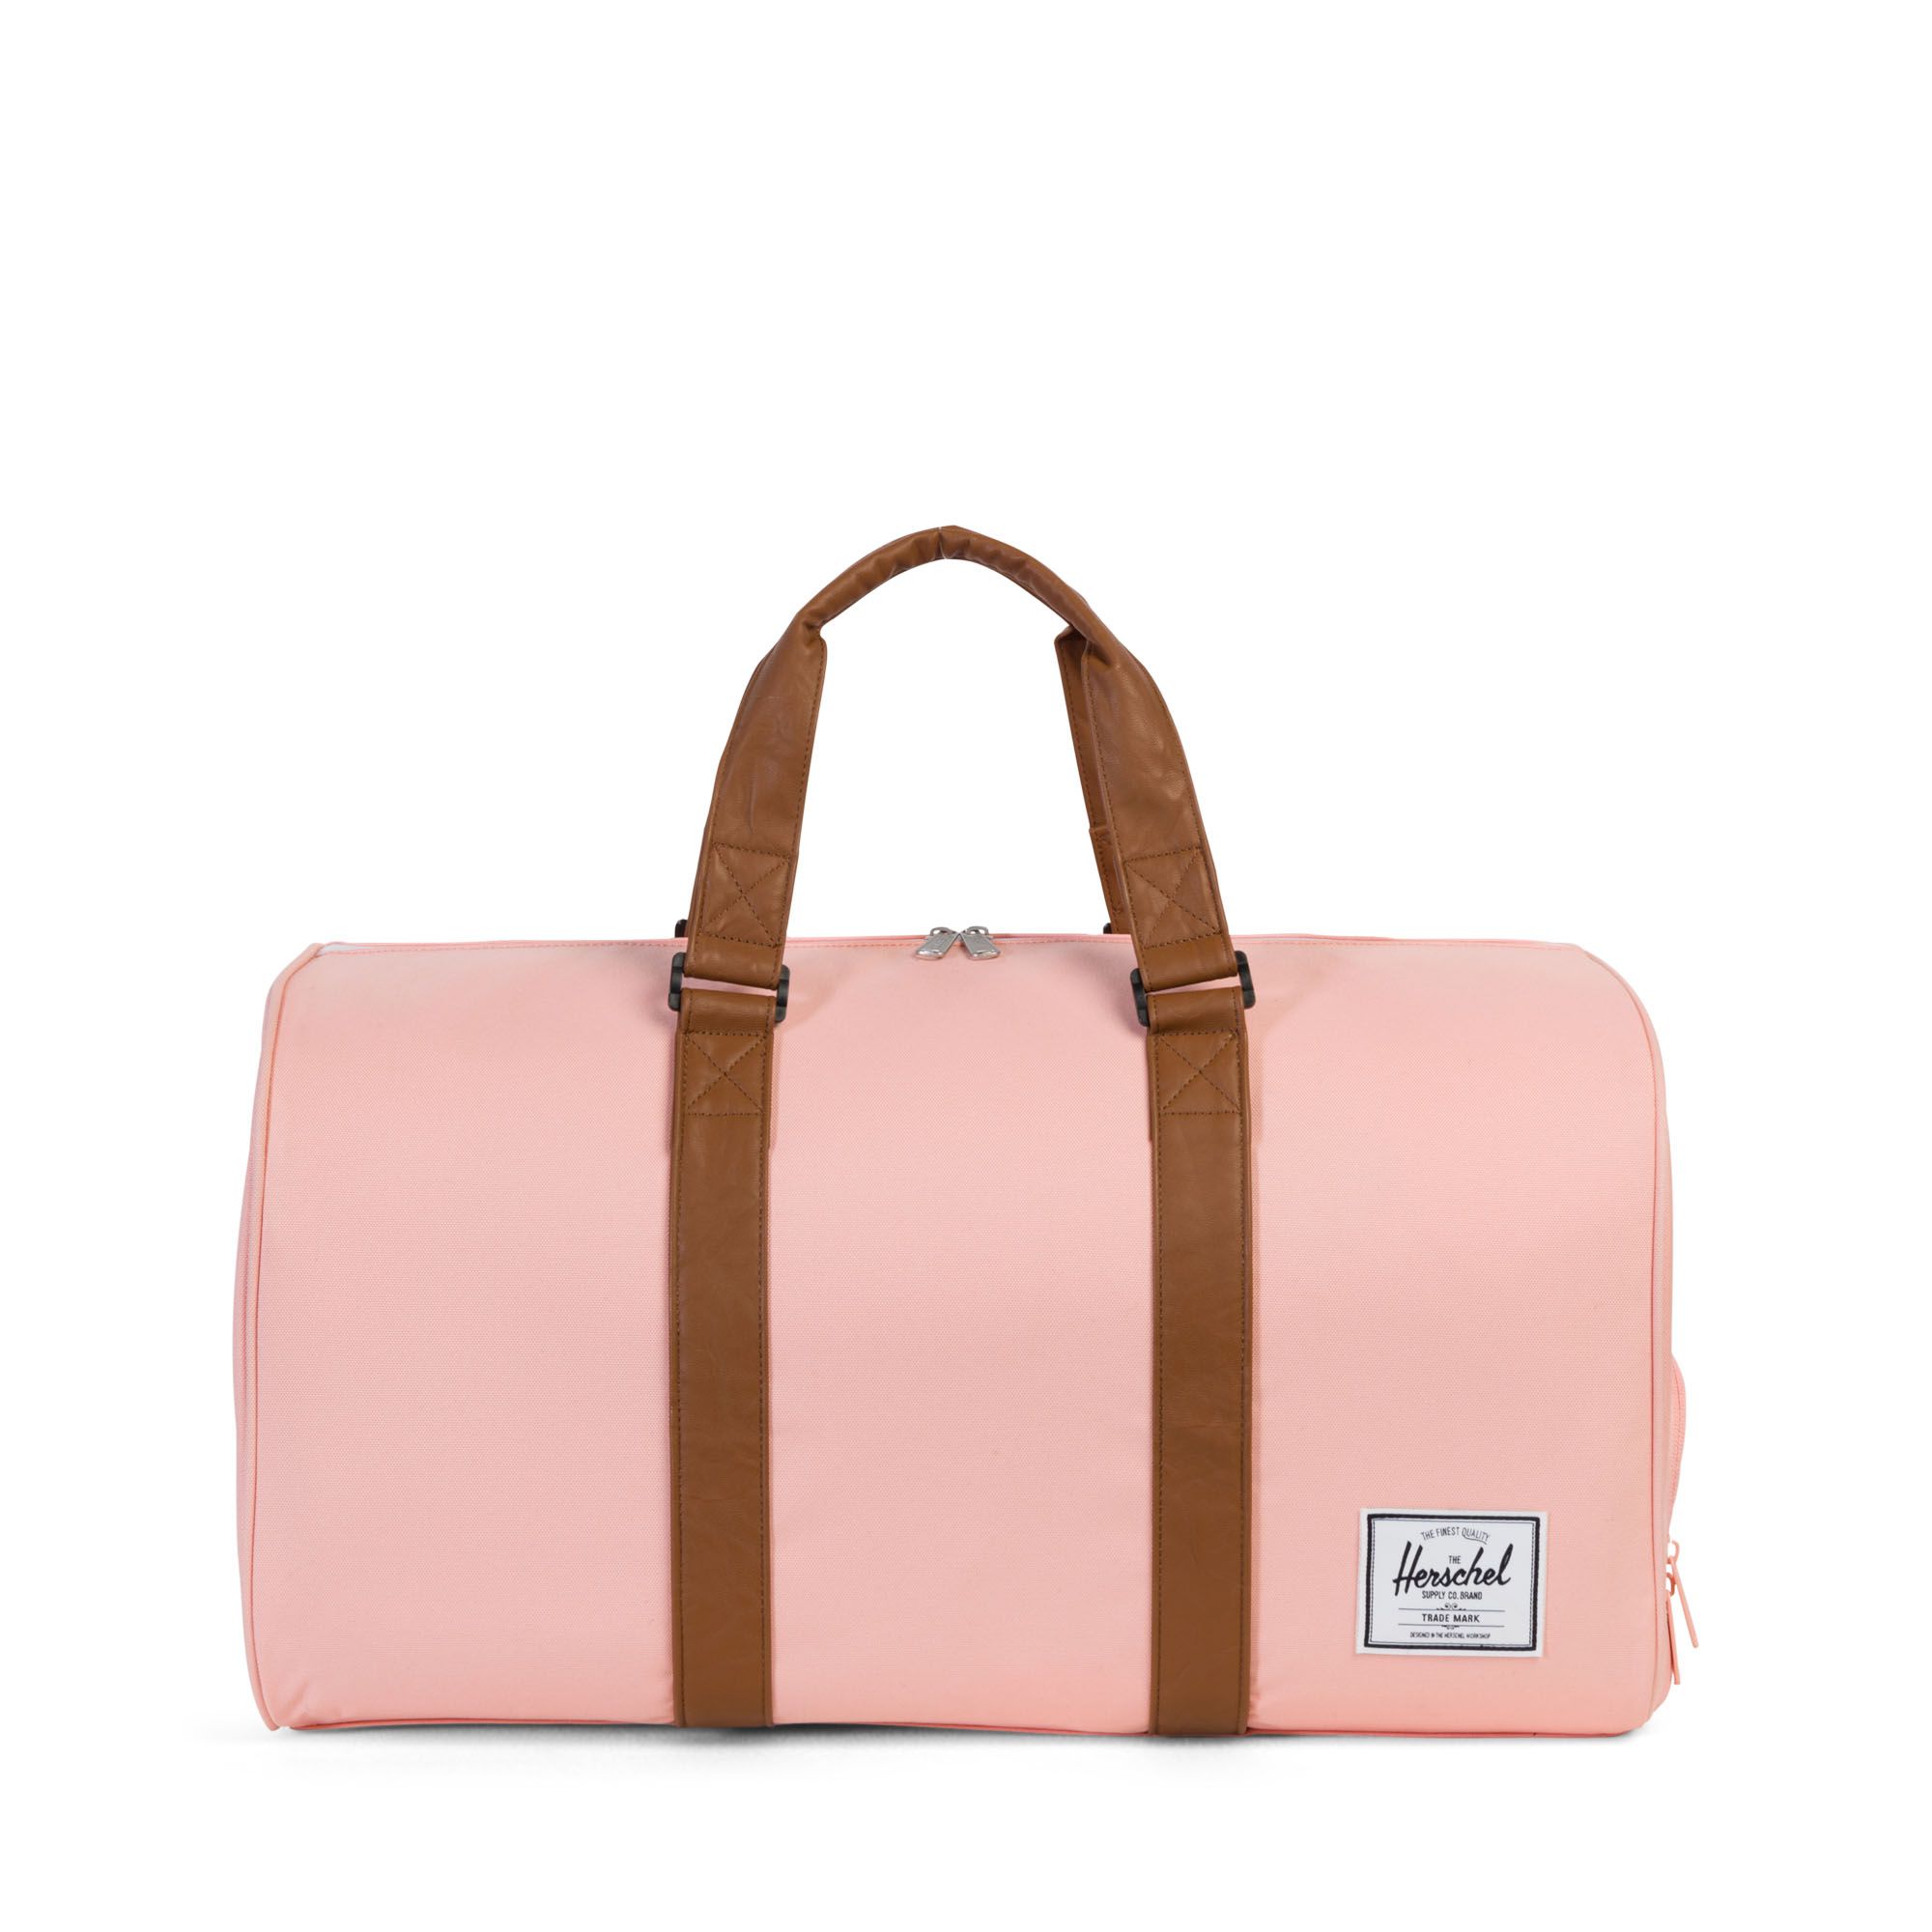 Herschel has released a line of millennial pink bags - Fashion Journal